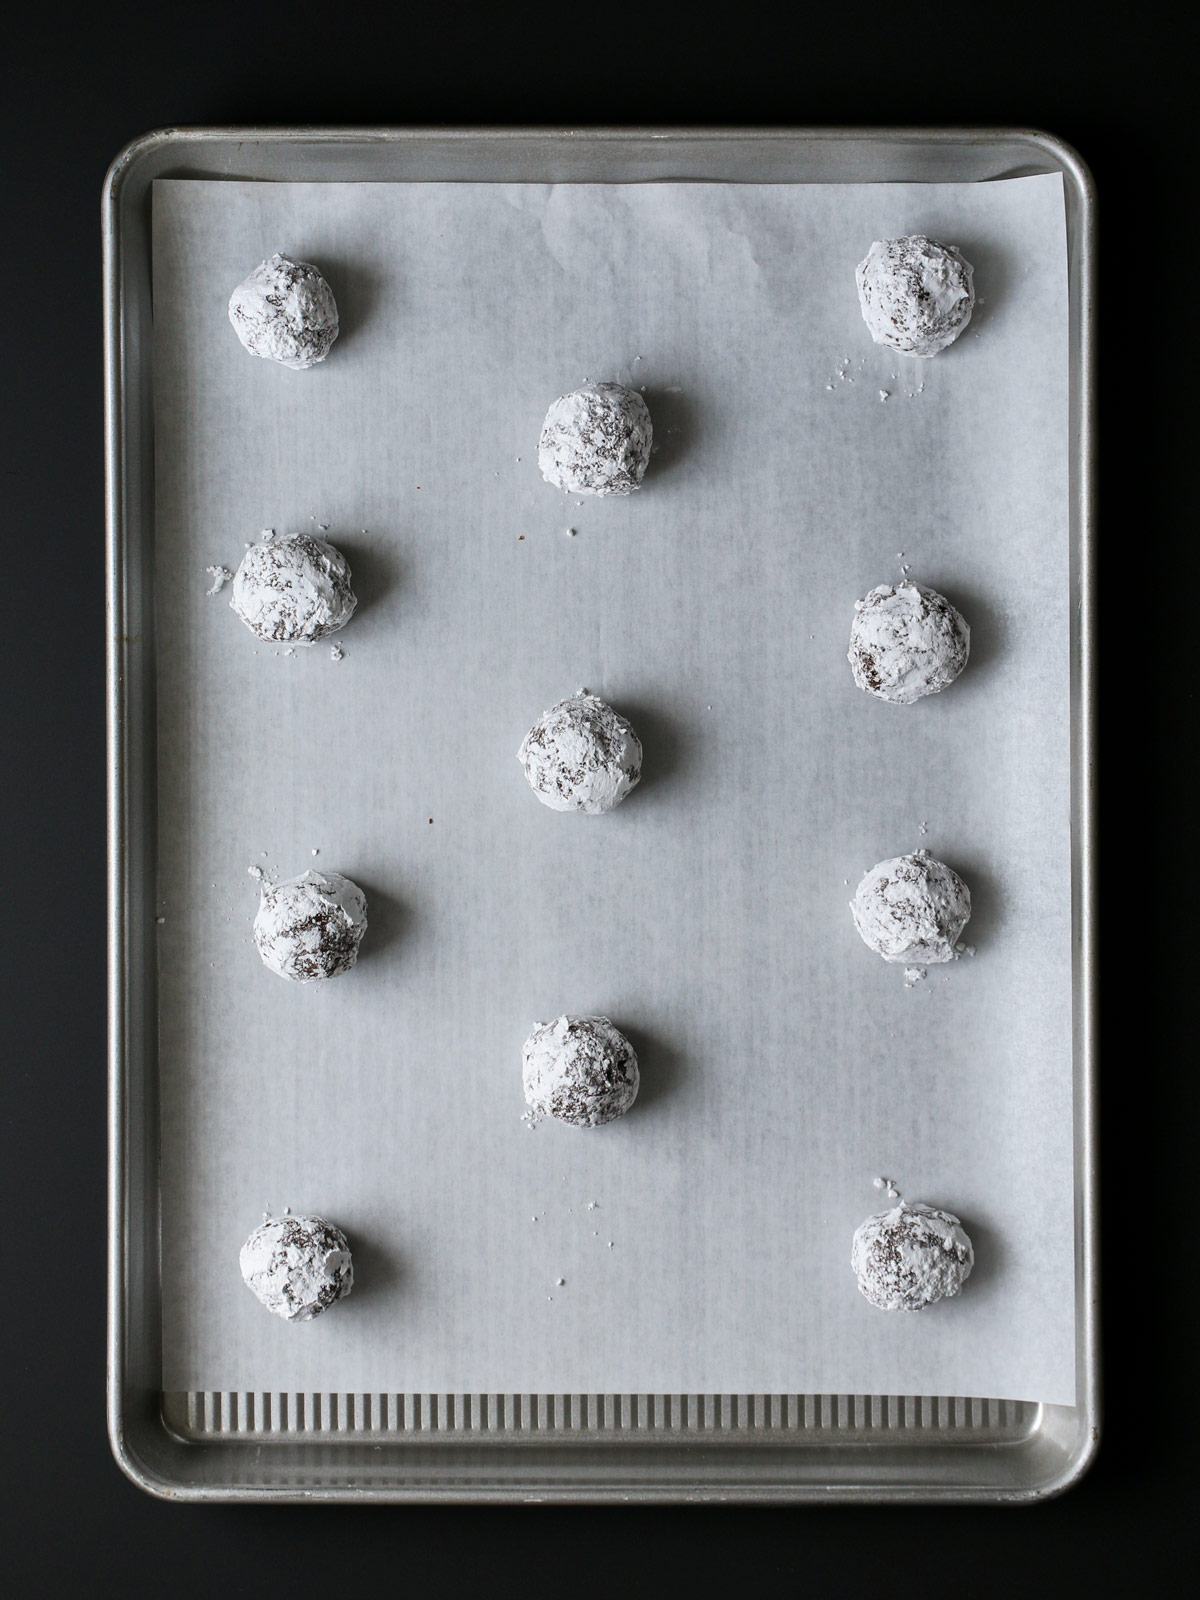 cookie dough balls on lined baking sheet.